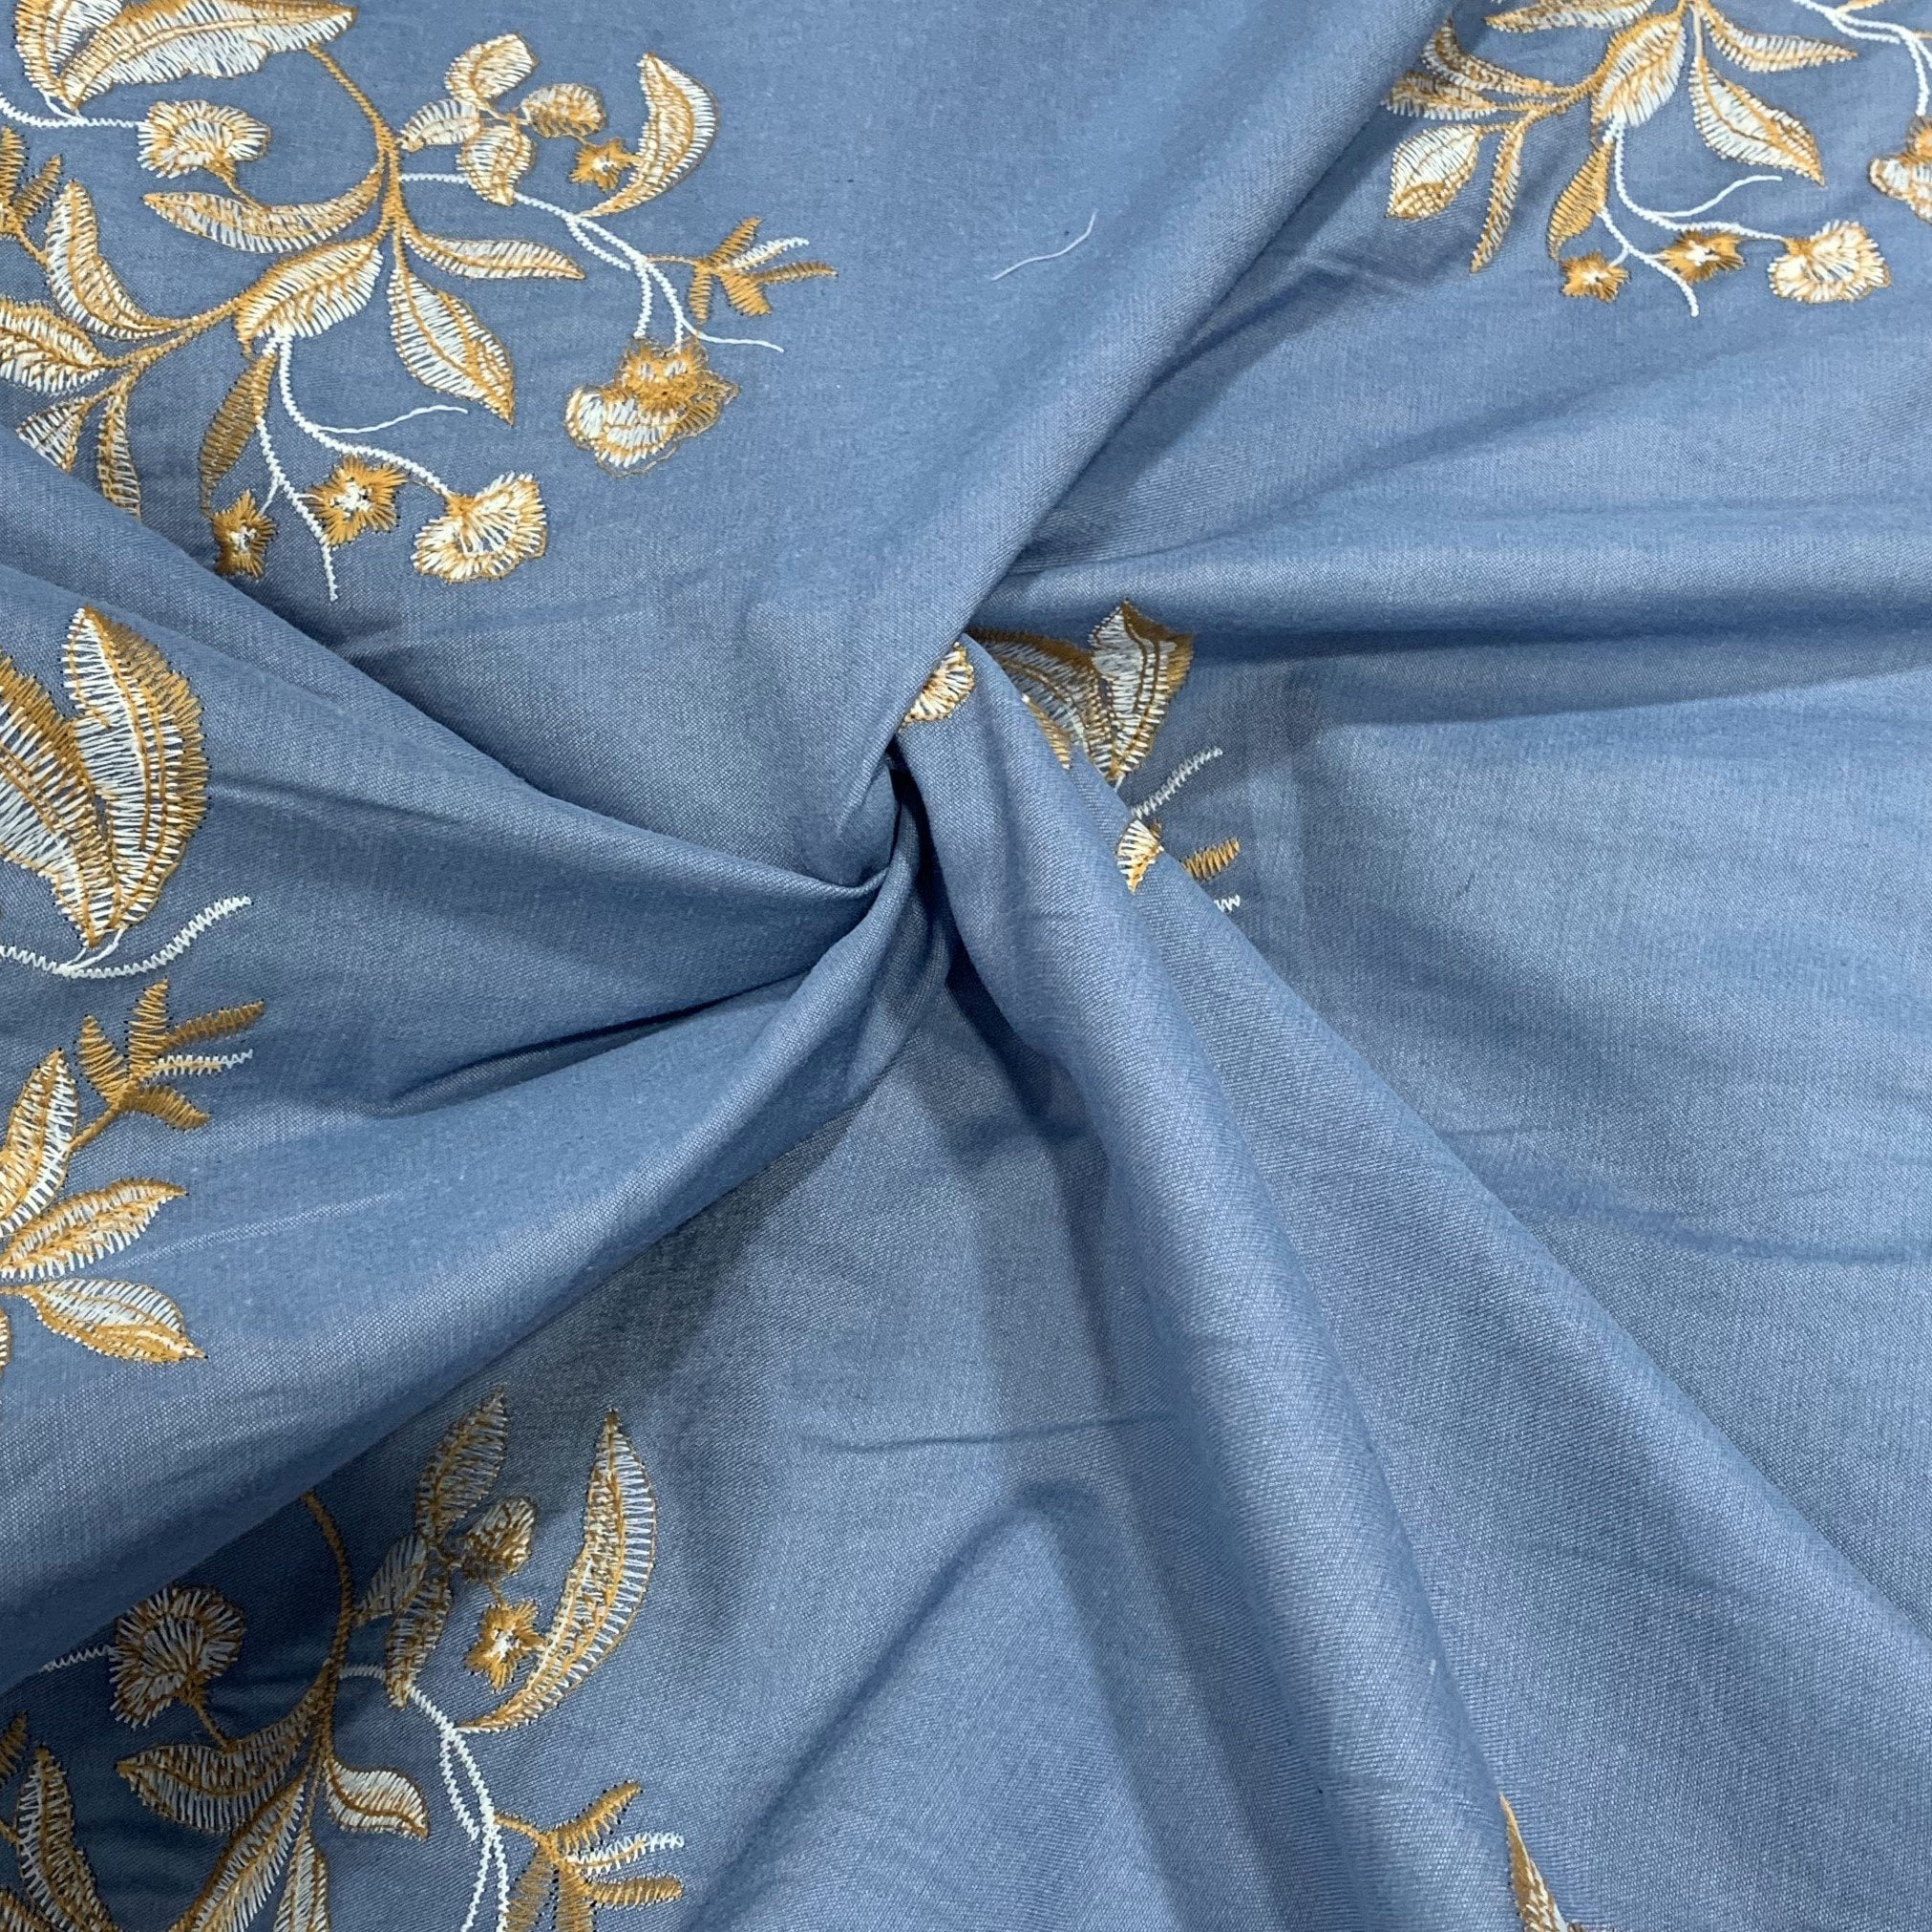 Tecido Mescla Jeans Bordado Azul Médio Flores Gold  - Empório dos Tecidos 